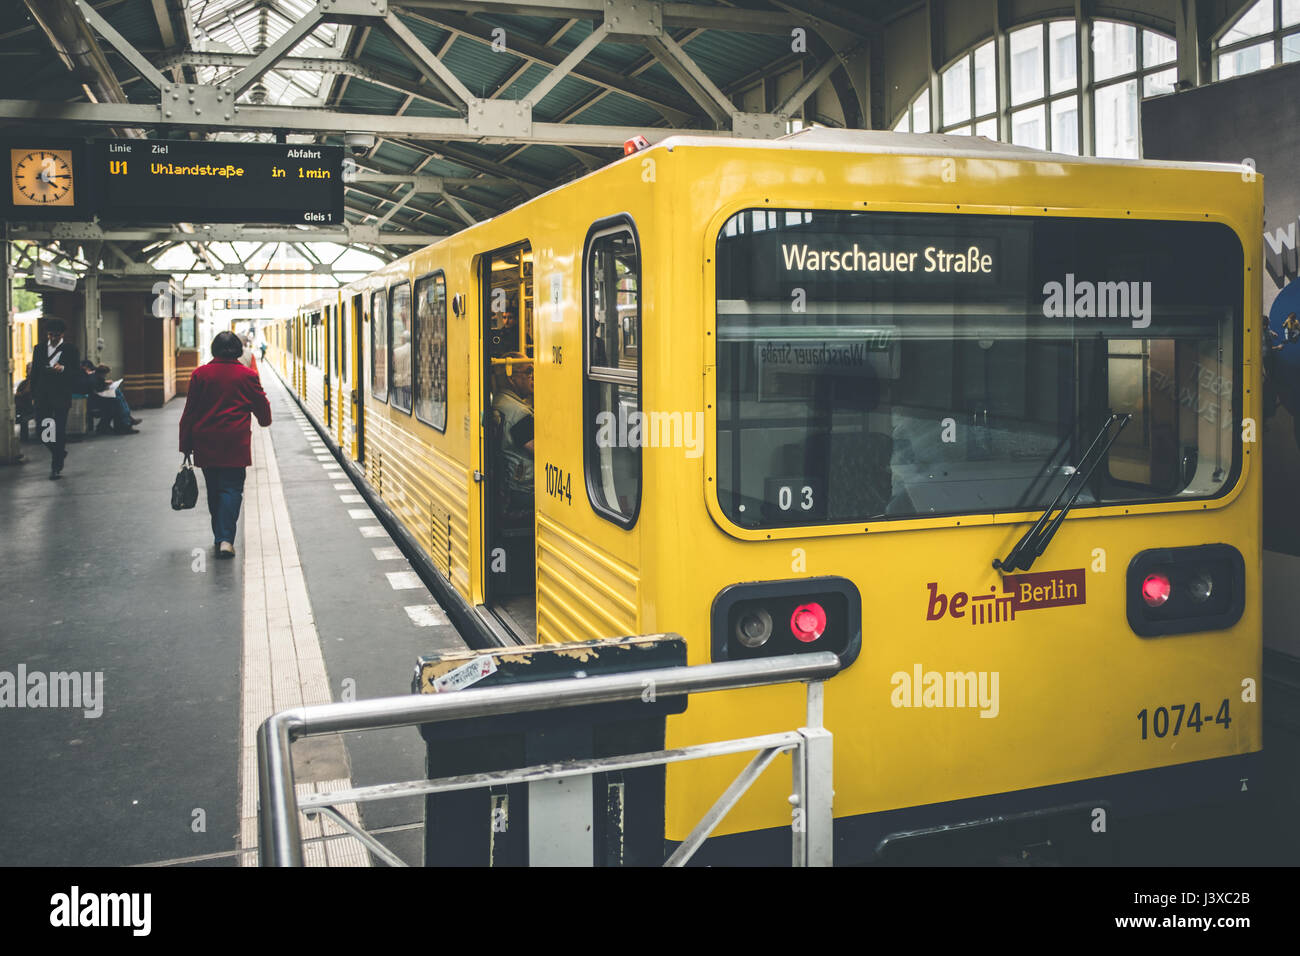 Berlin, Germany - may 03, 2017: Berlin subway train at train station (Warschauer Str) in Berlin, Germany Stock Photo